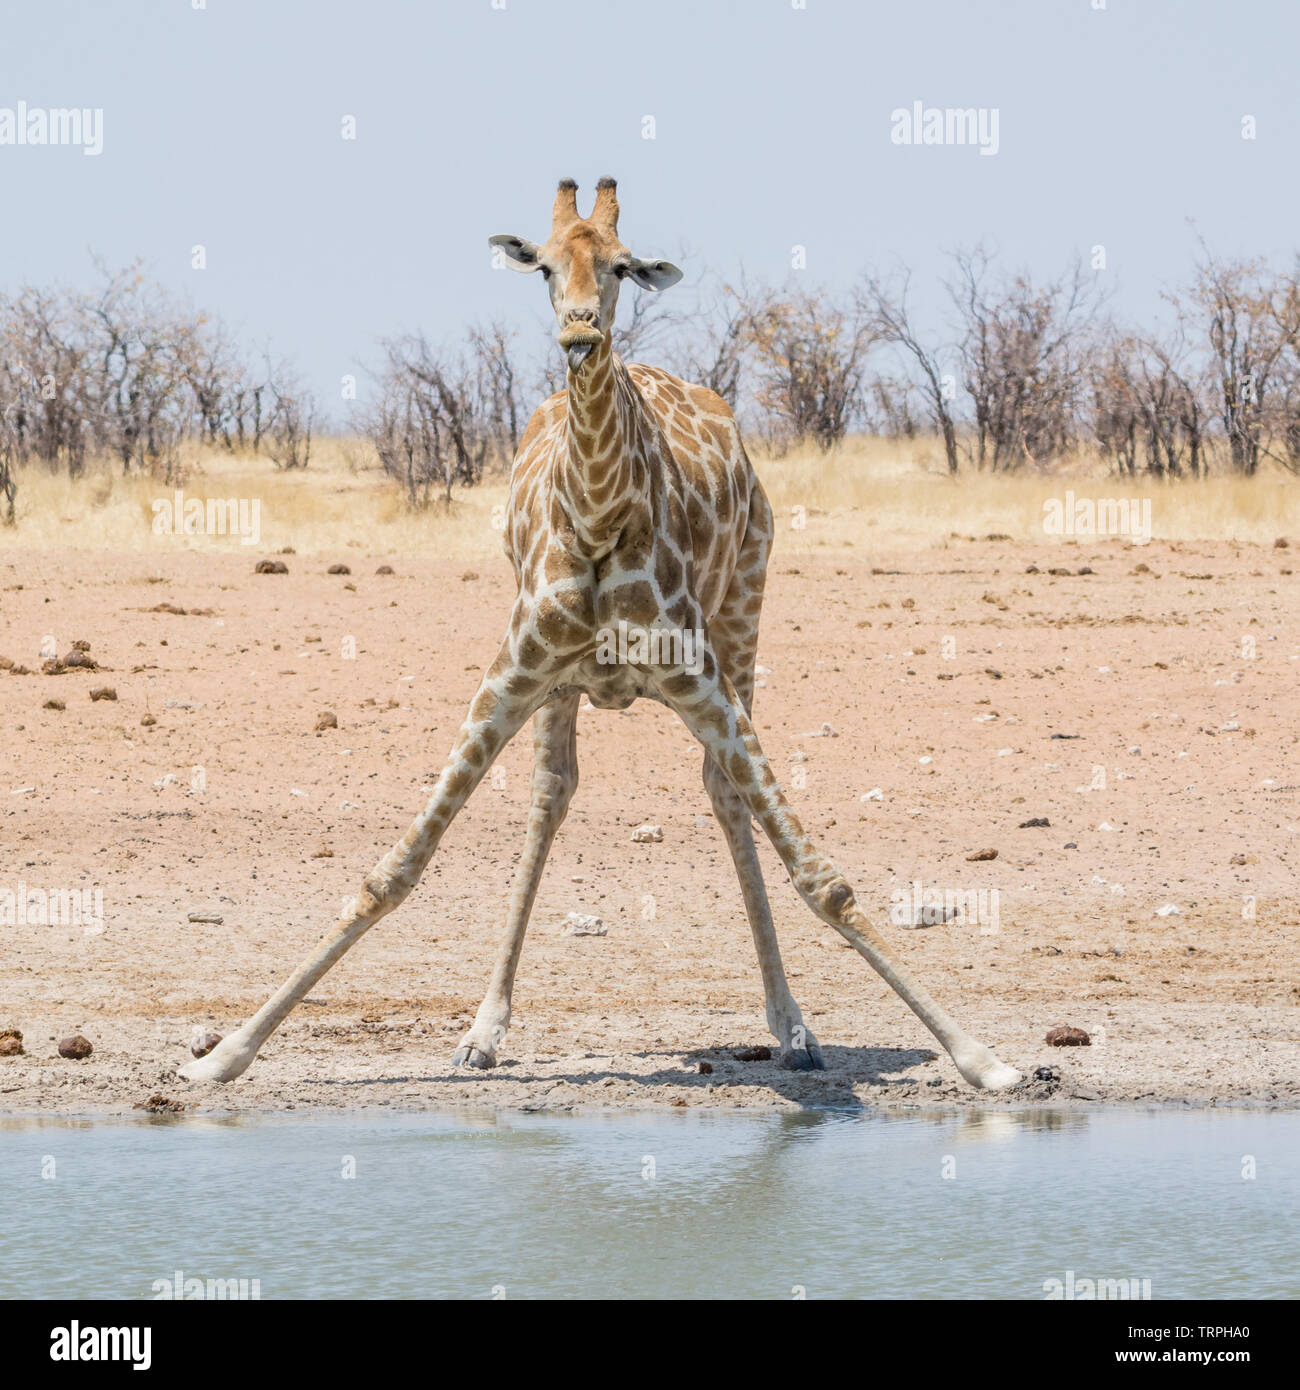 A Giraffe drinking at a watering hole in Namibian savanna Stock Photo